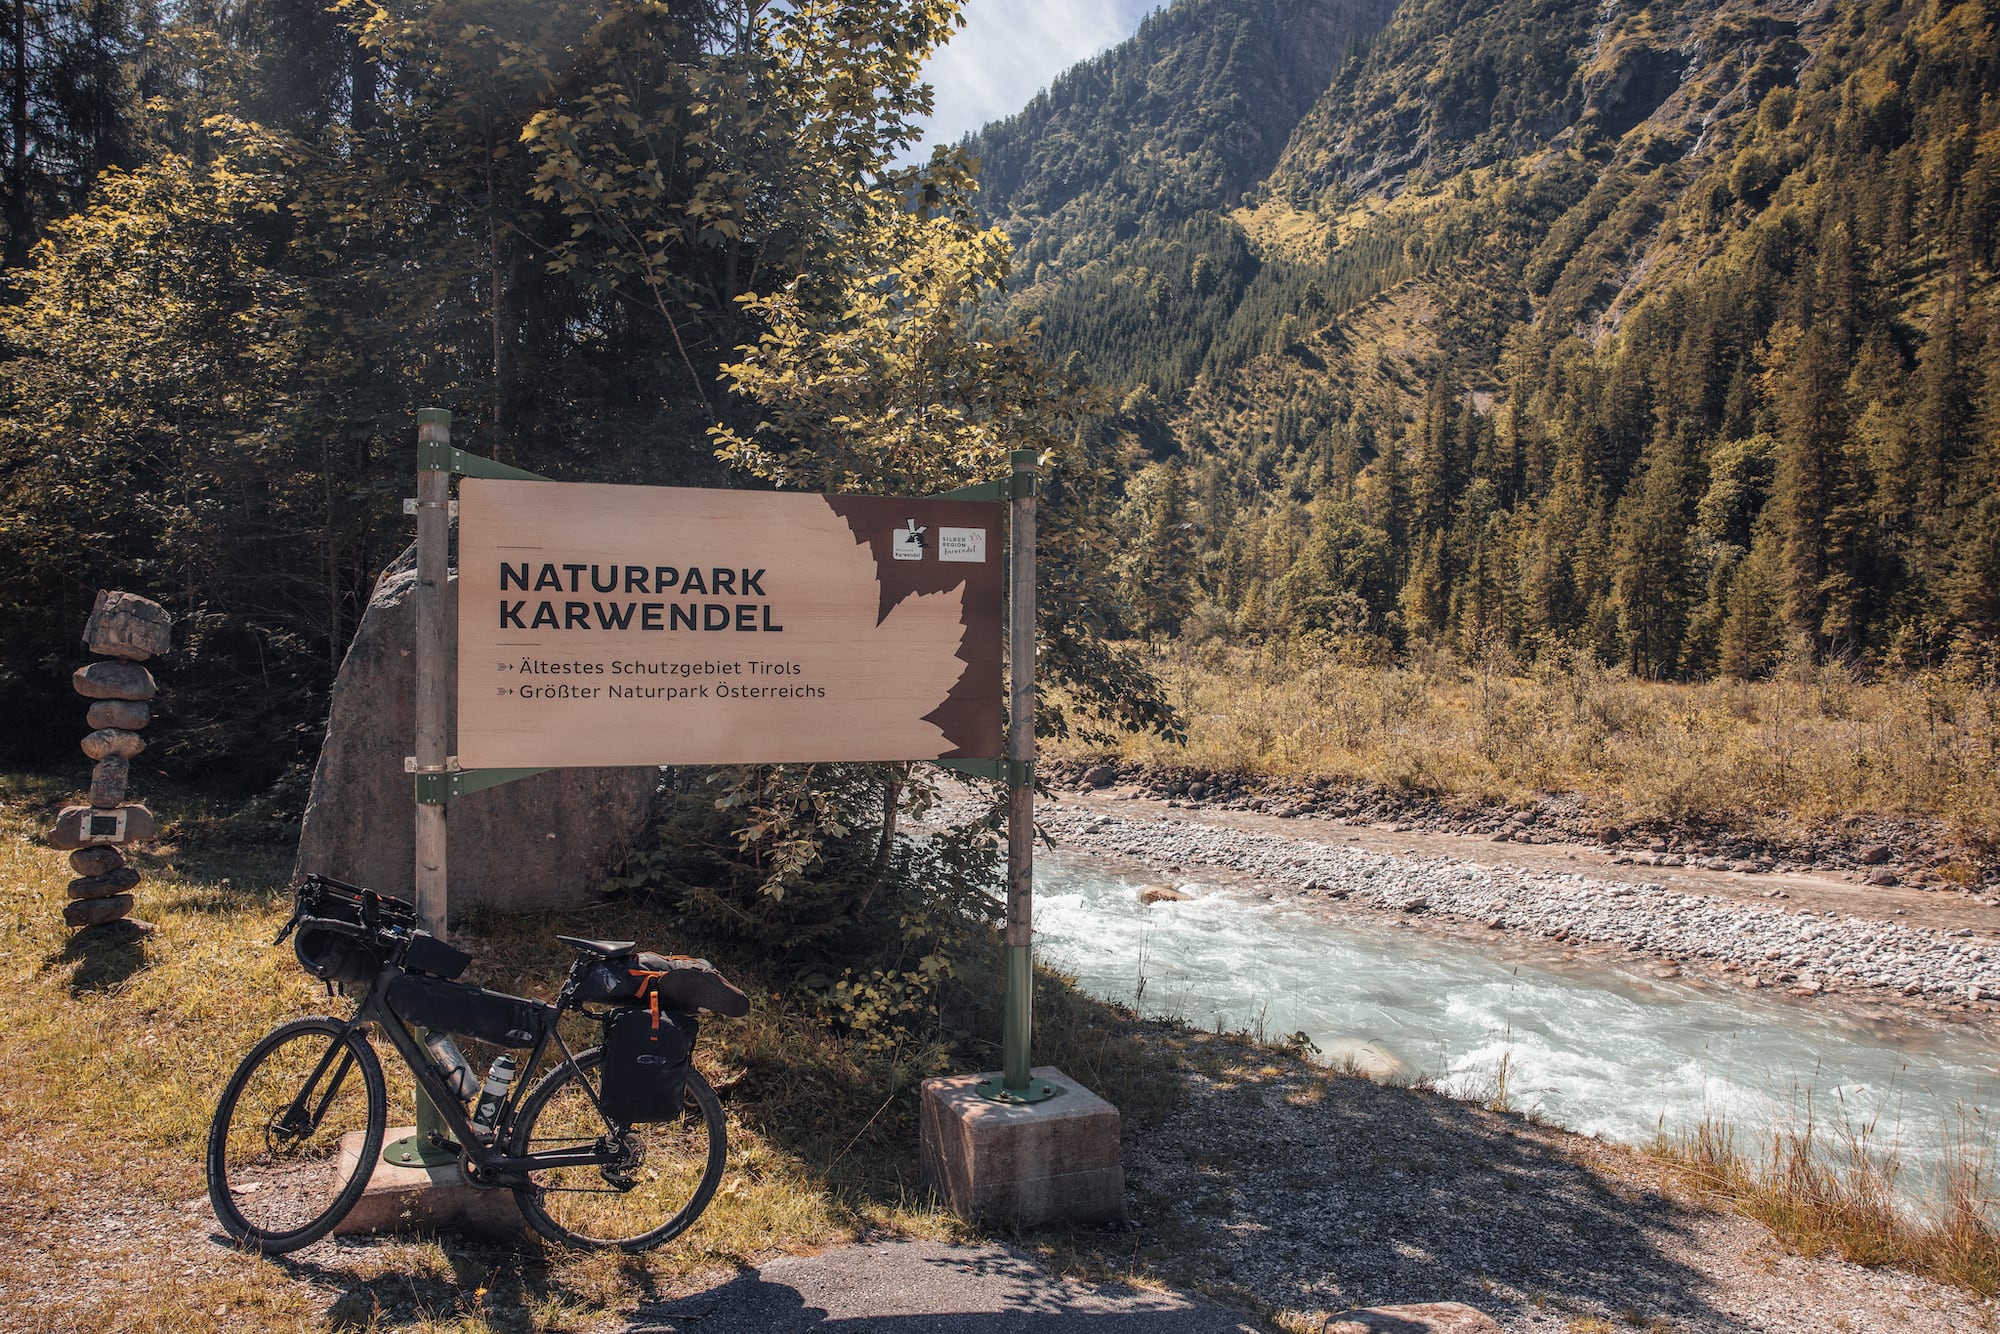 Fahrrad vorm Naturpark Karwendel Schild in Tirol